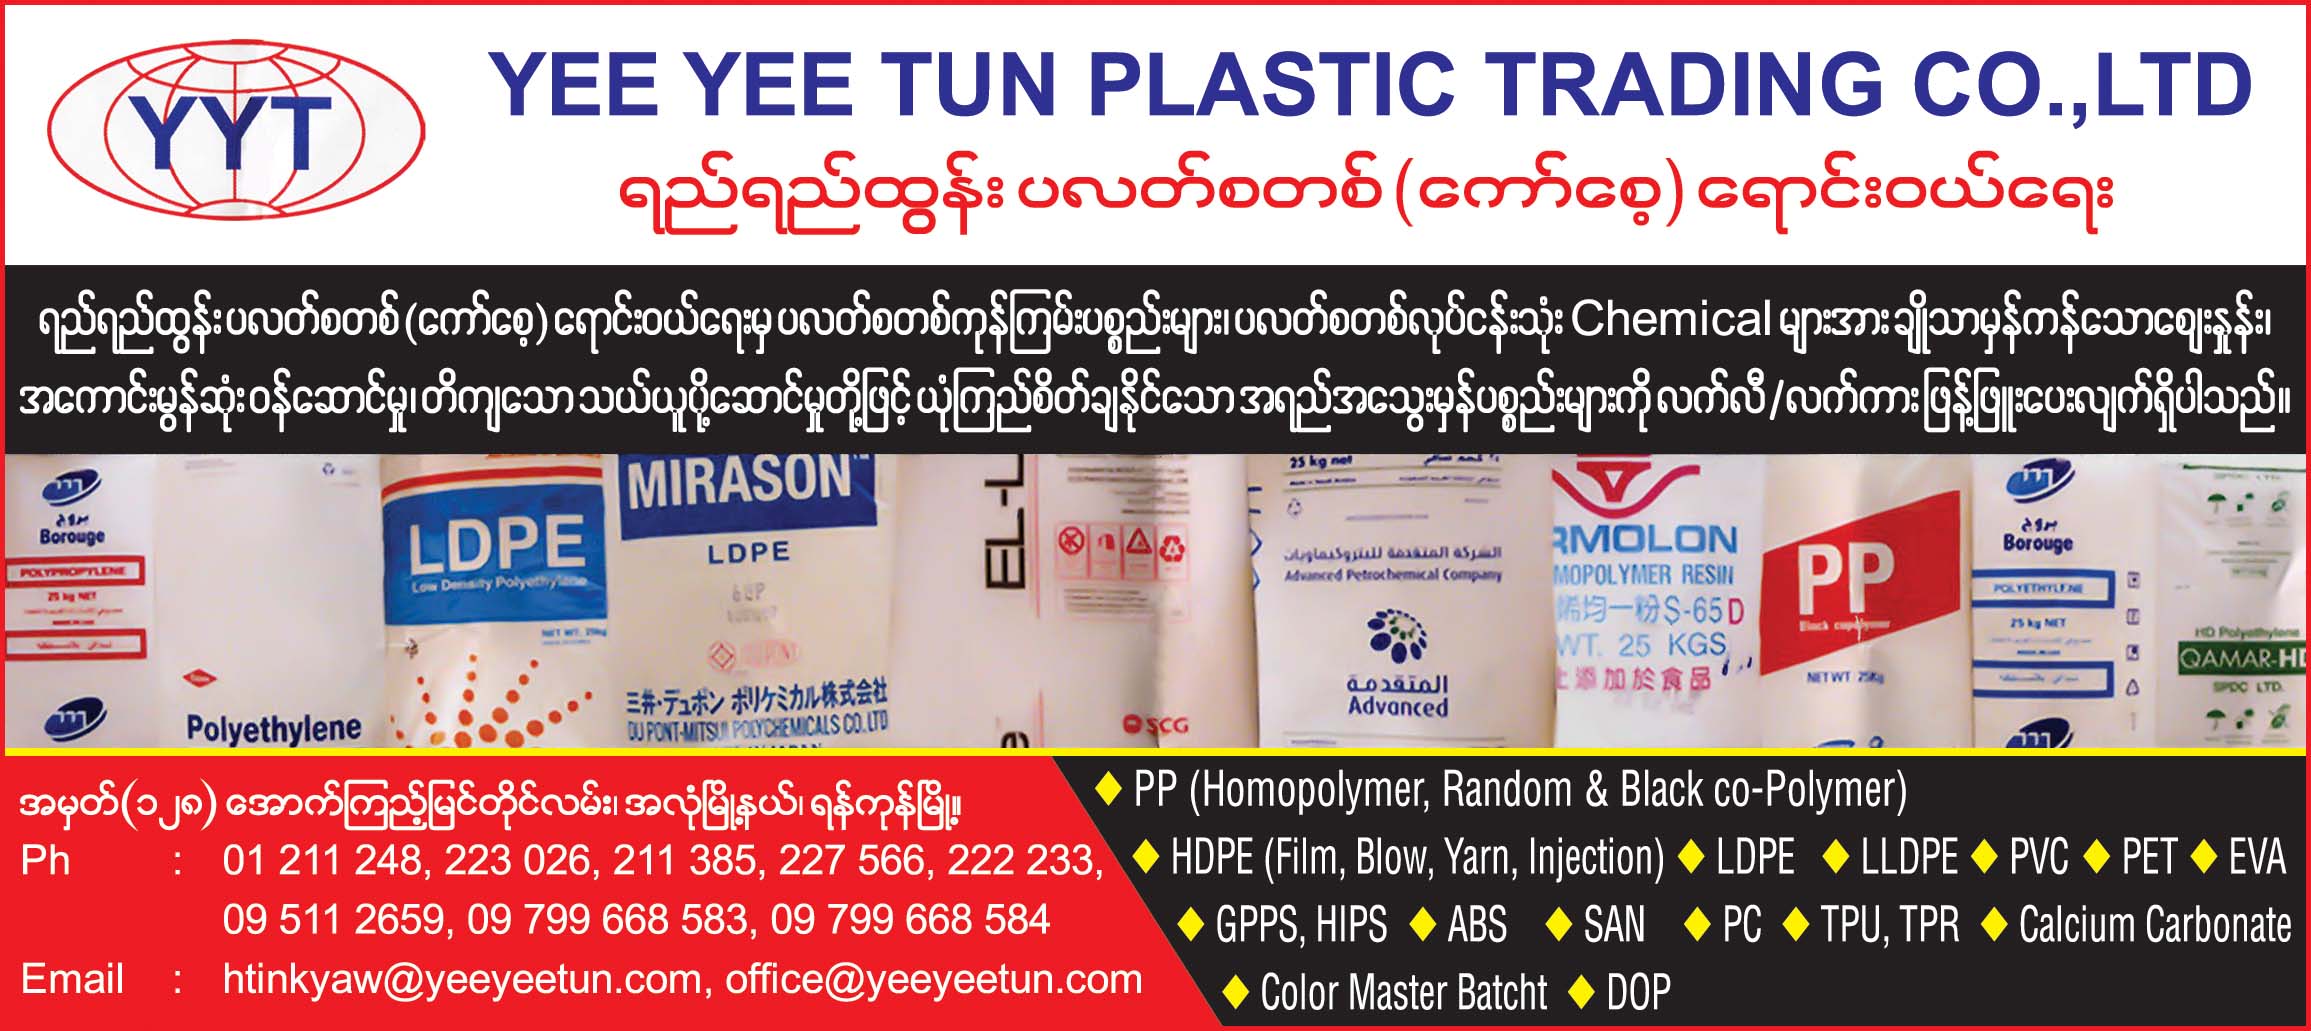 Yee Yee Tun Plastic Trading Co., Ltd.